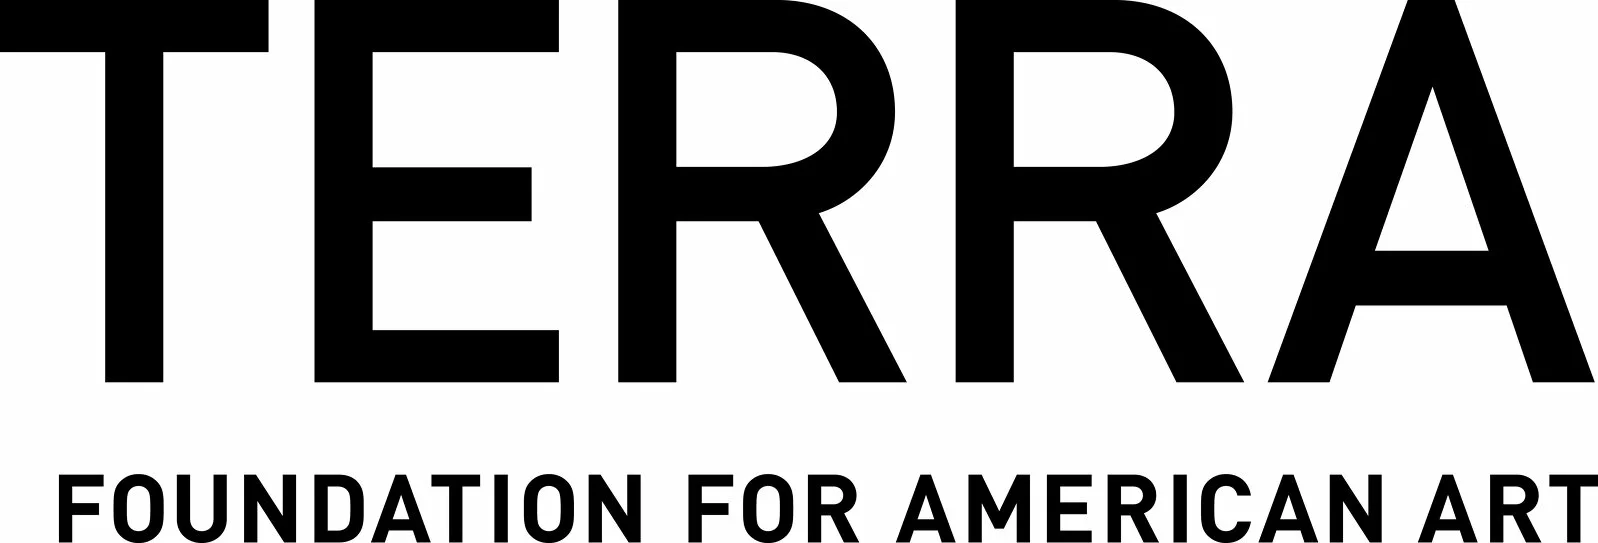 Terra Foundation for American Art Logo